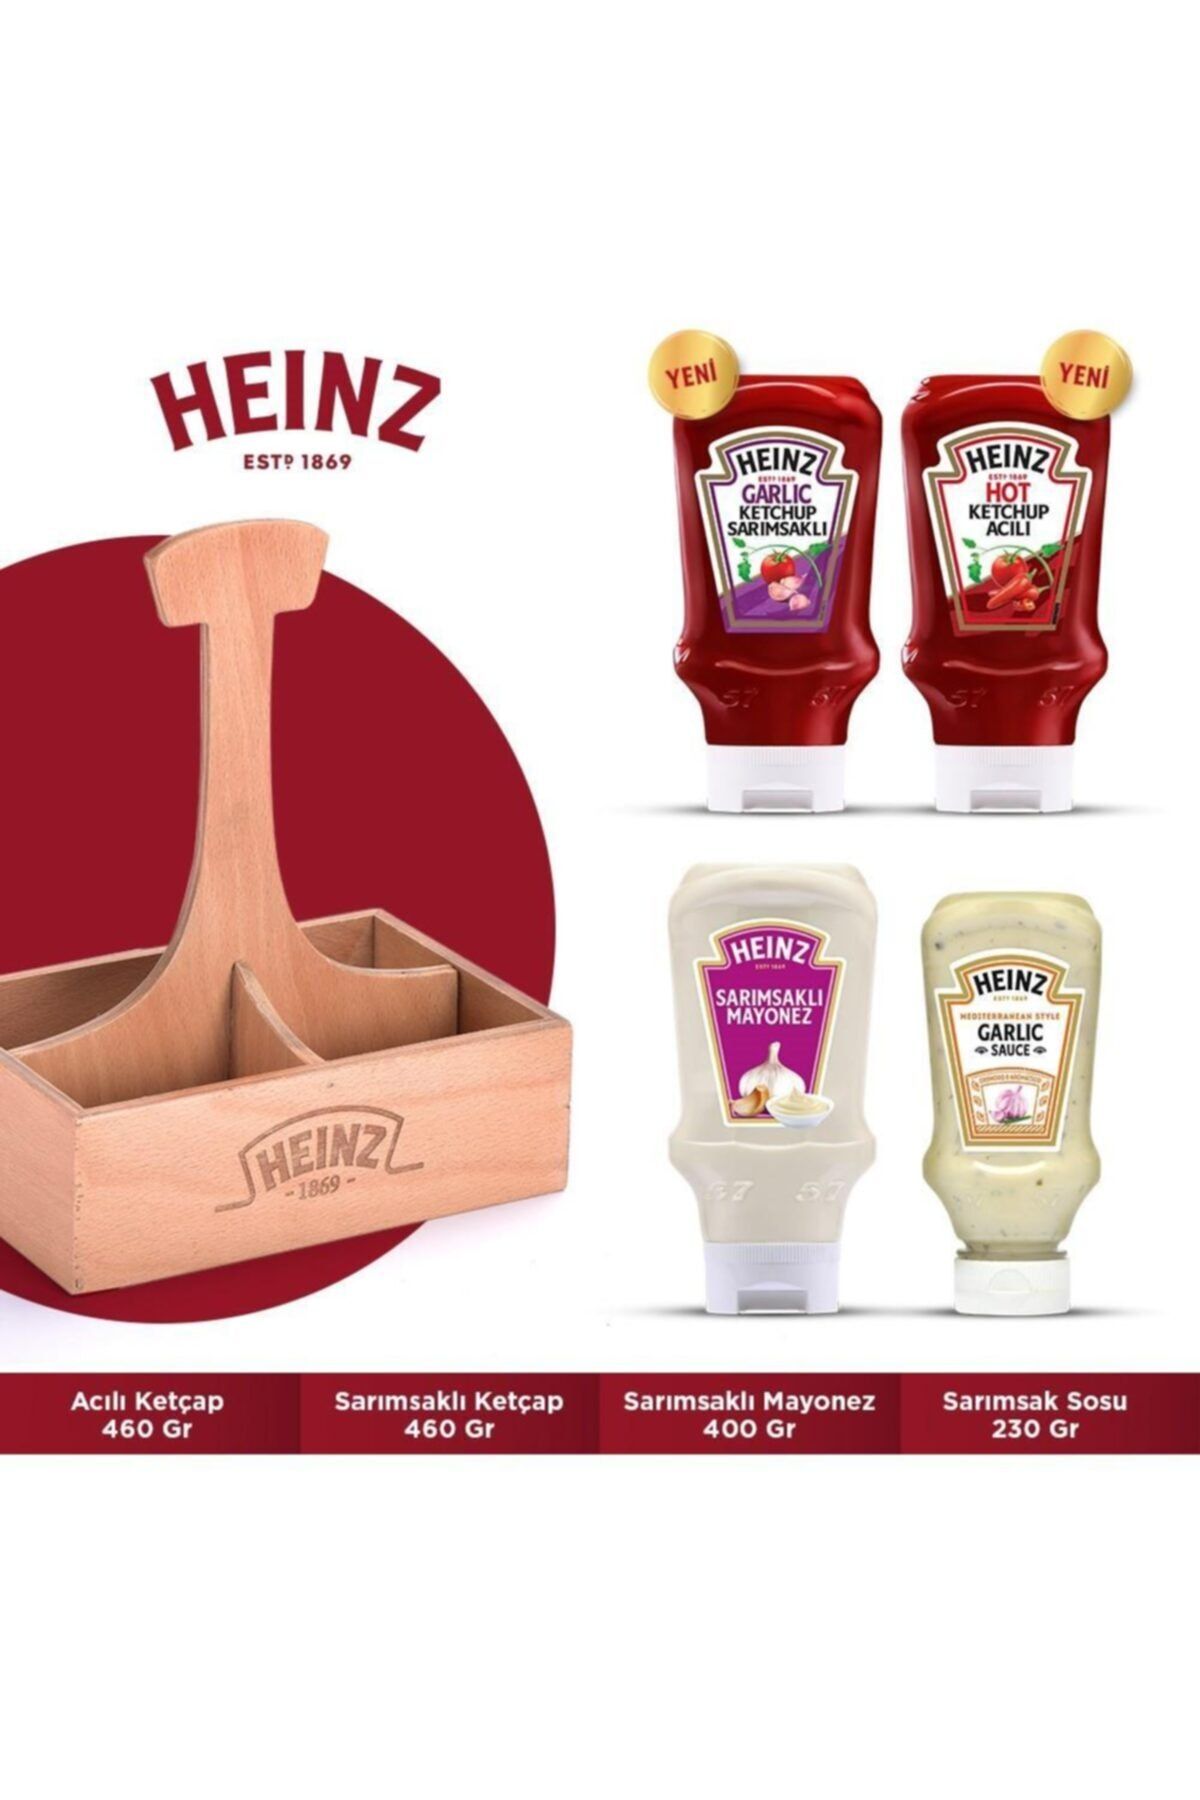 Heinz Ahşap Sos Paketi  Yeni Acılı Ketçap 460 gr  Yeni Sarımsaklı Ketçap 460 gr  Sarımsaklı